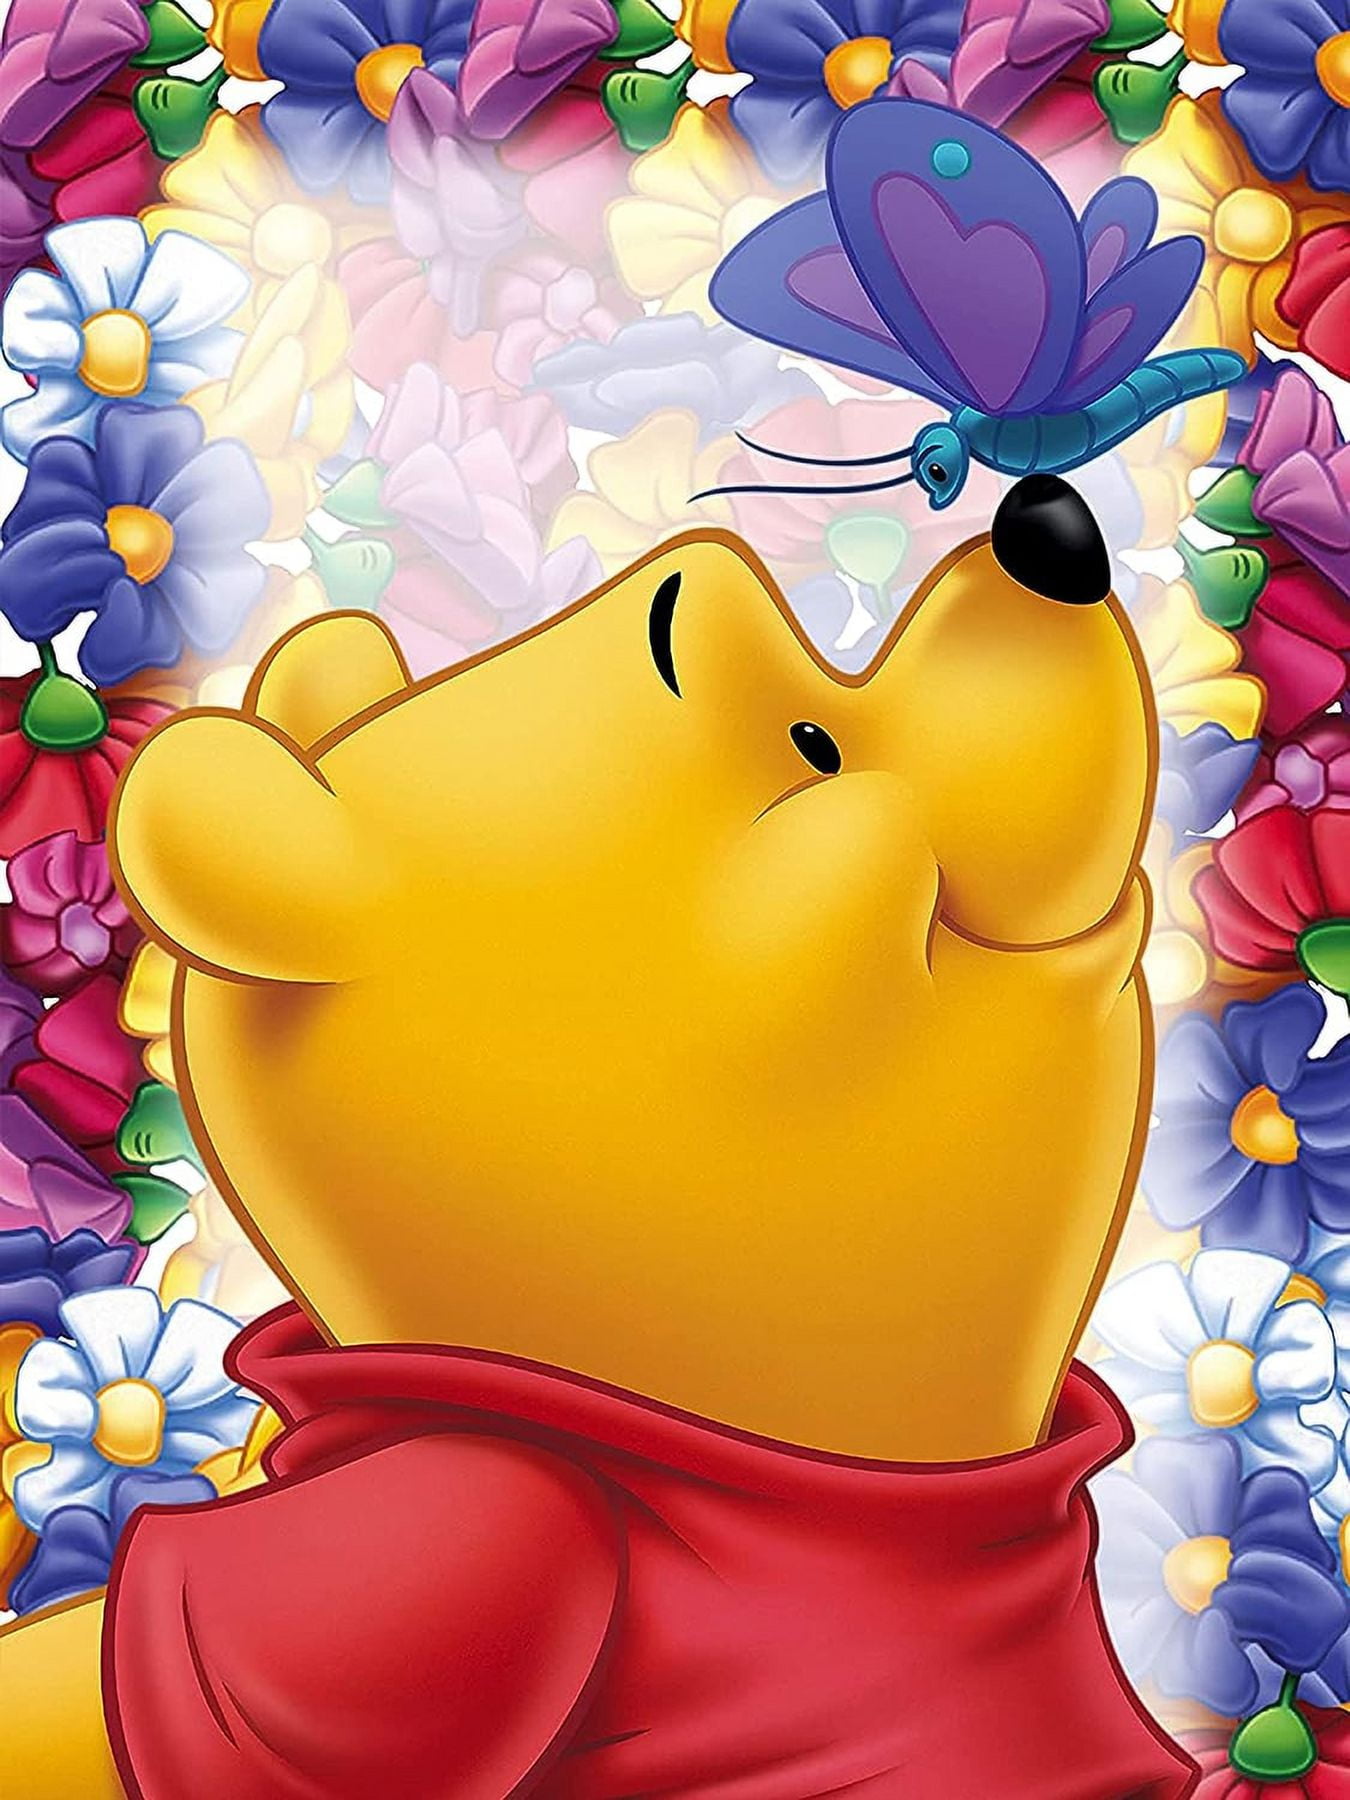 89 Winnie the Pooh Diamond Painting ideas